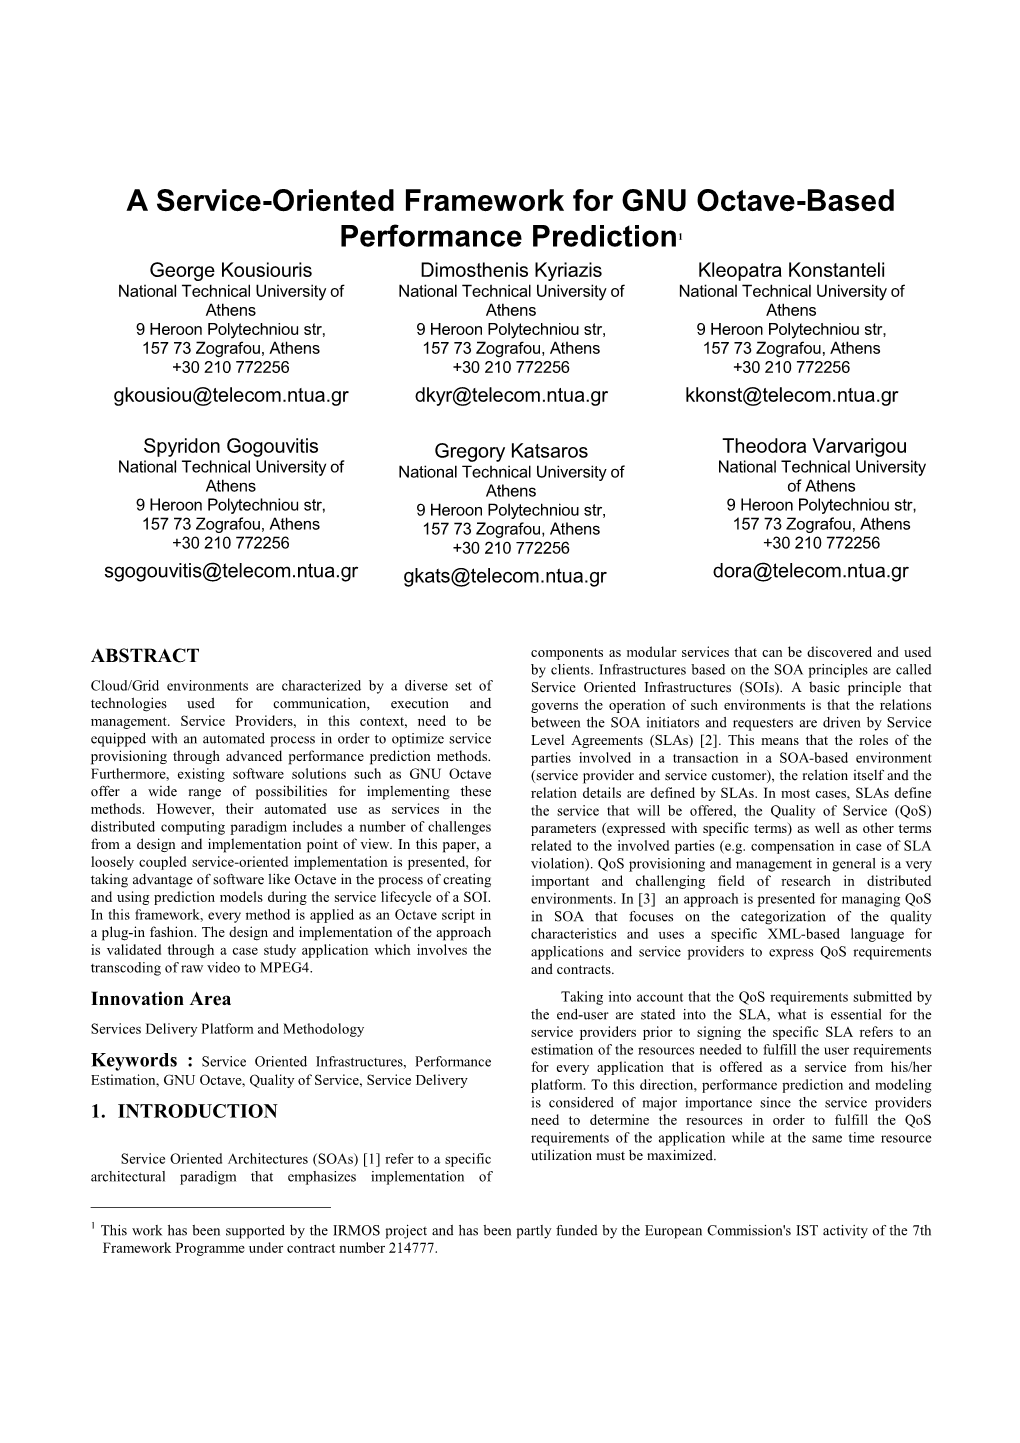 A Service-Oriented Framework for GNU Octave-Based Performance Prediction1